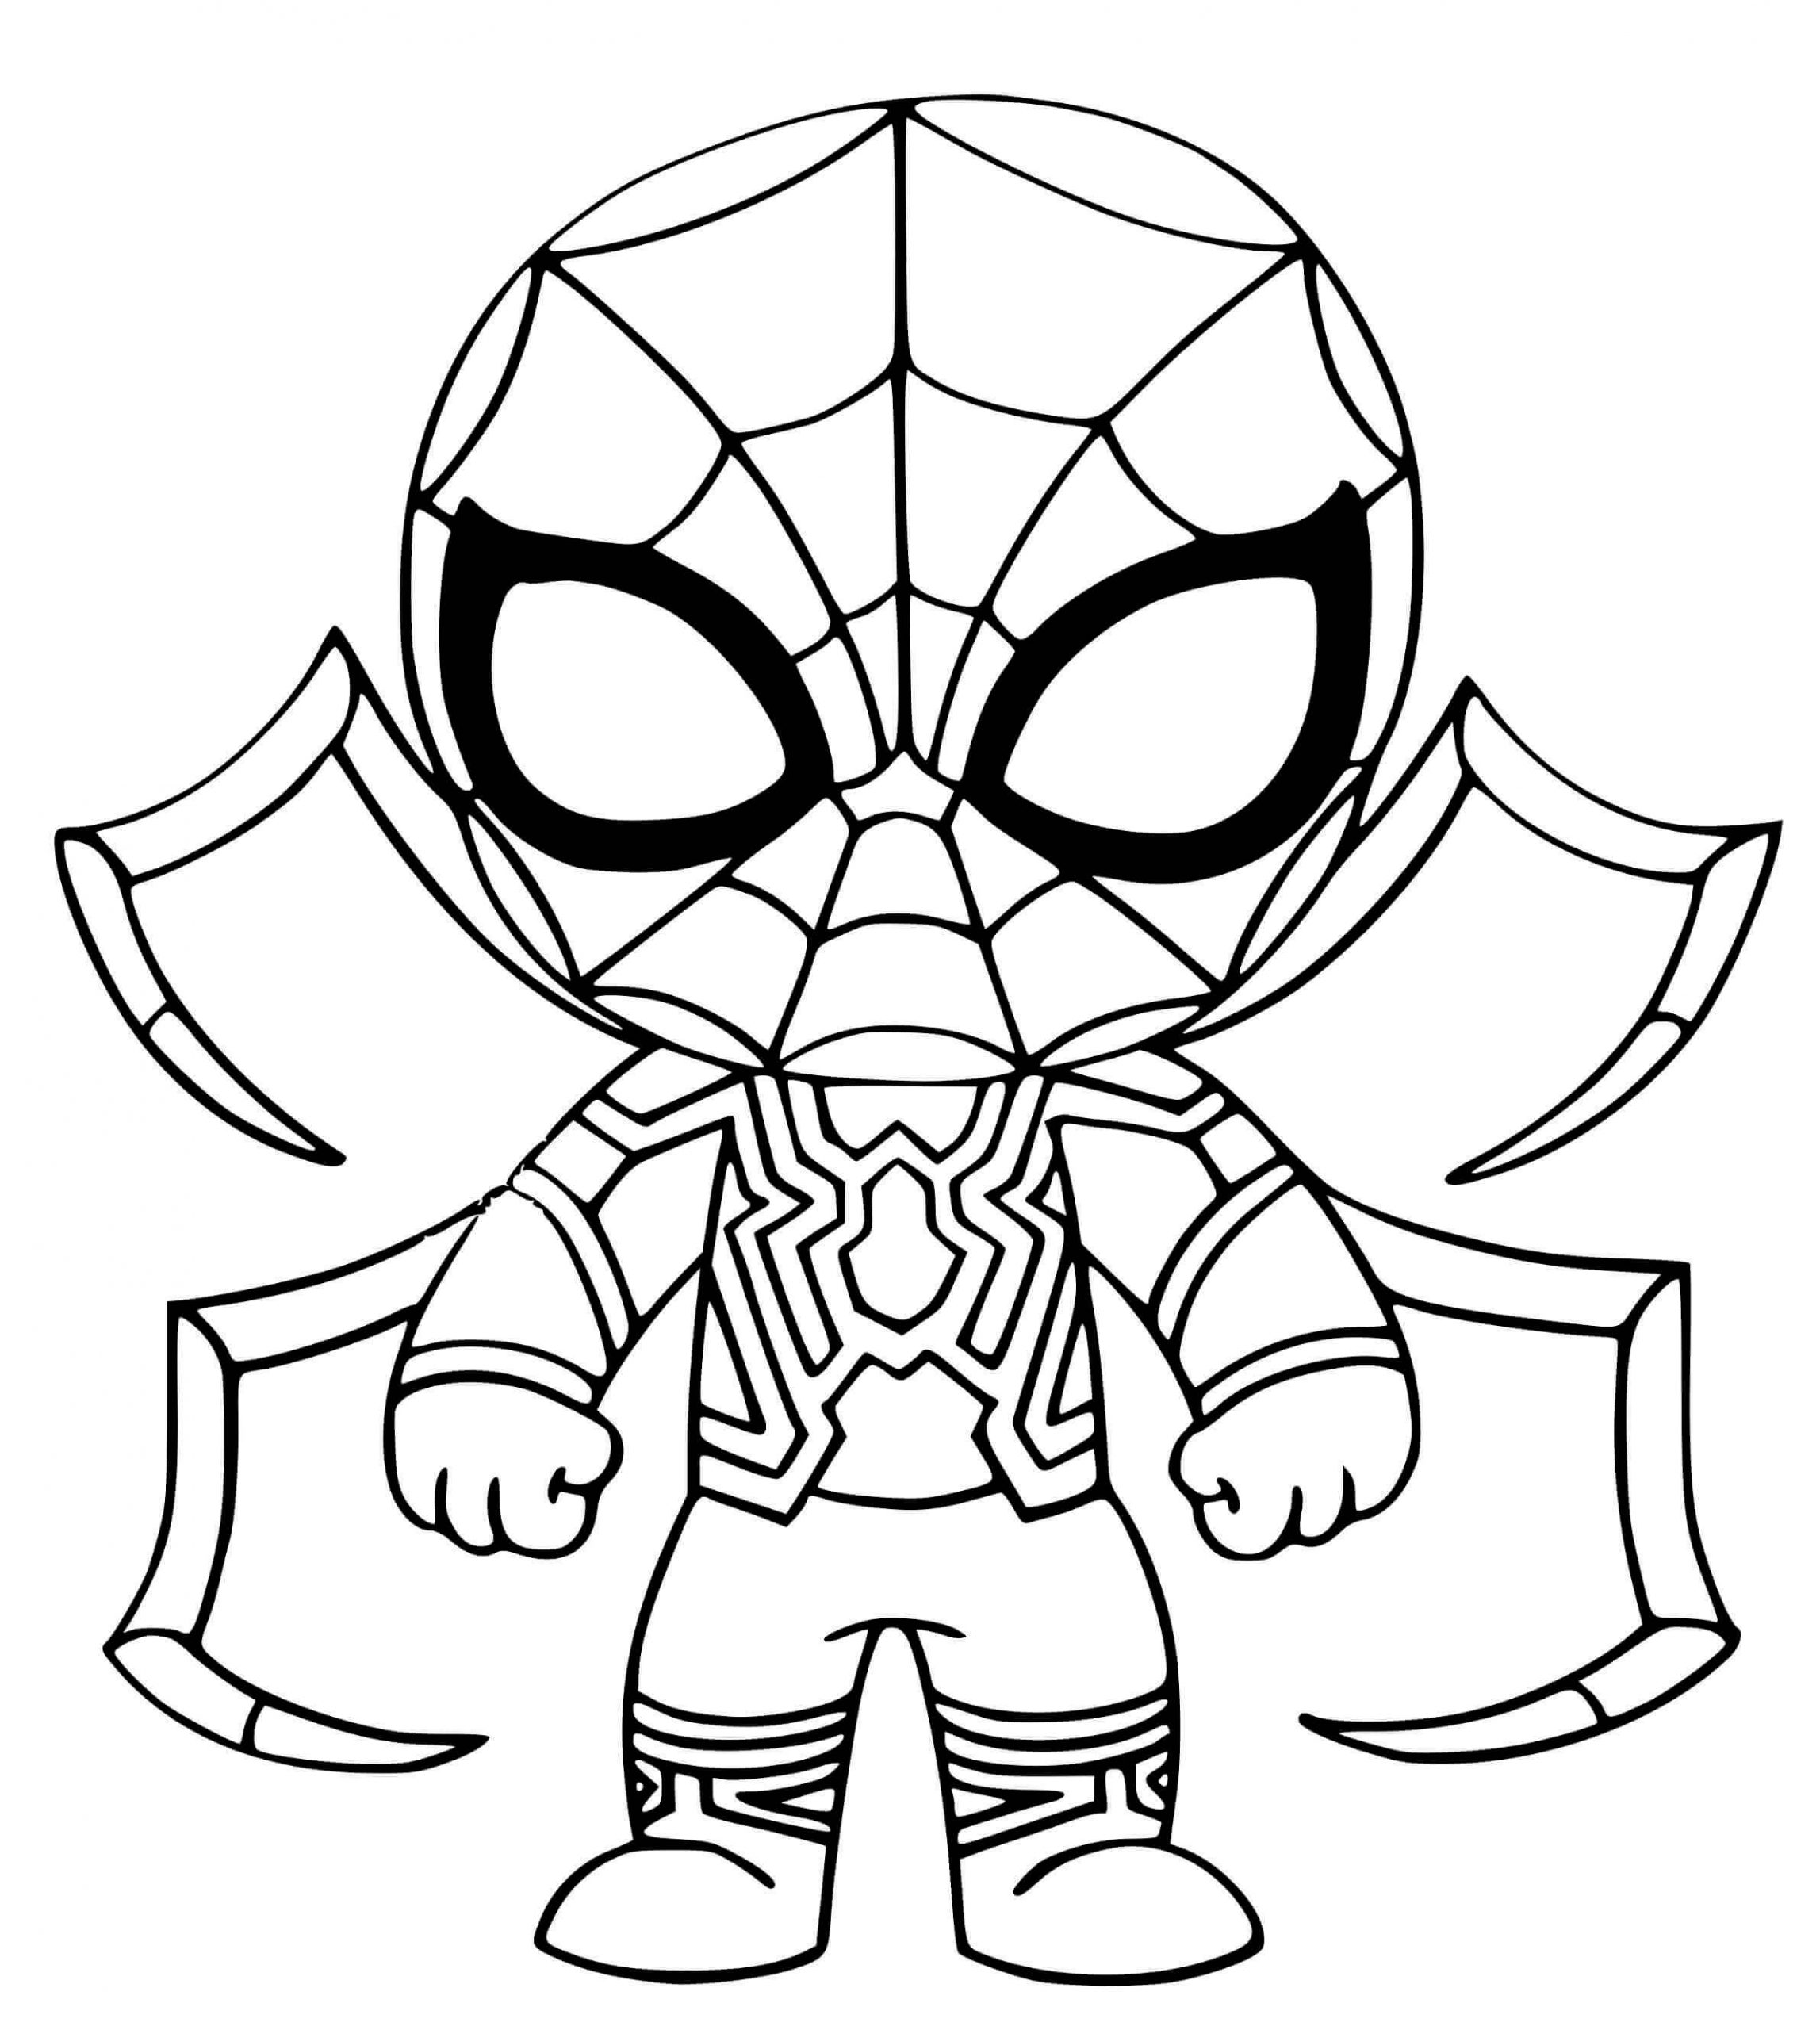 Chibi Iron Spiderman